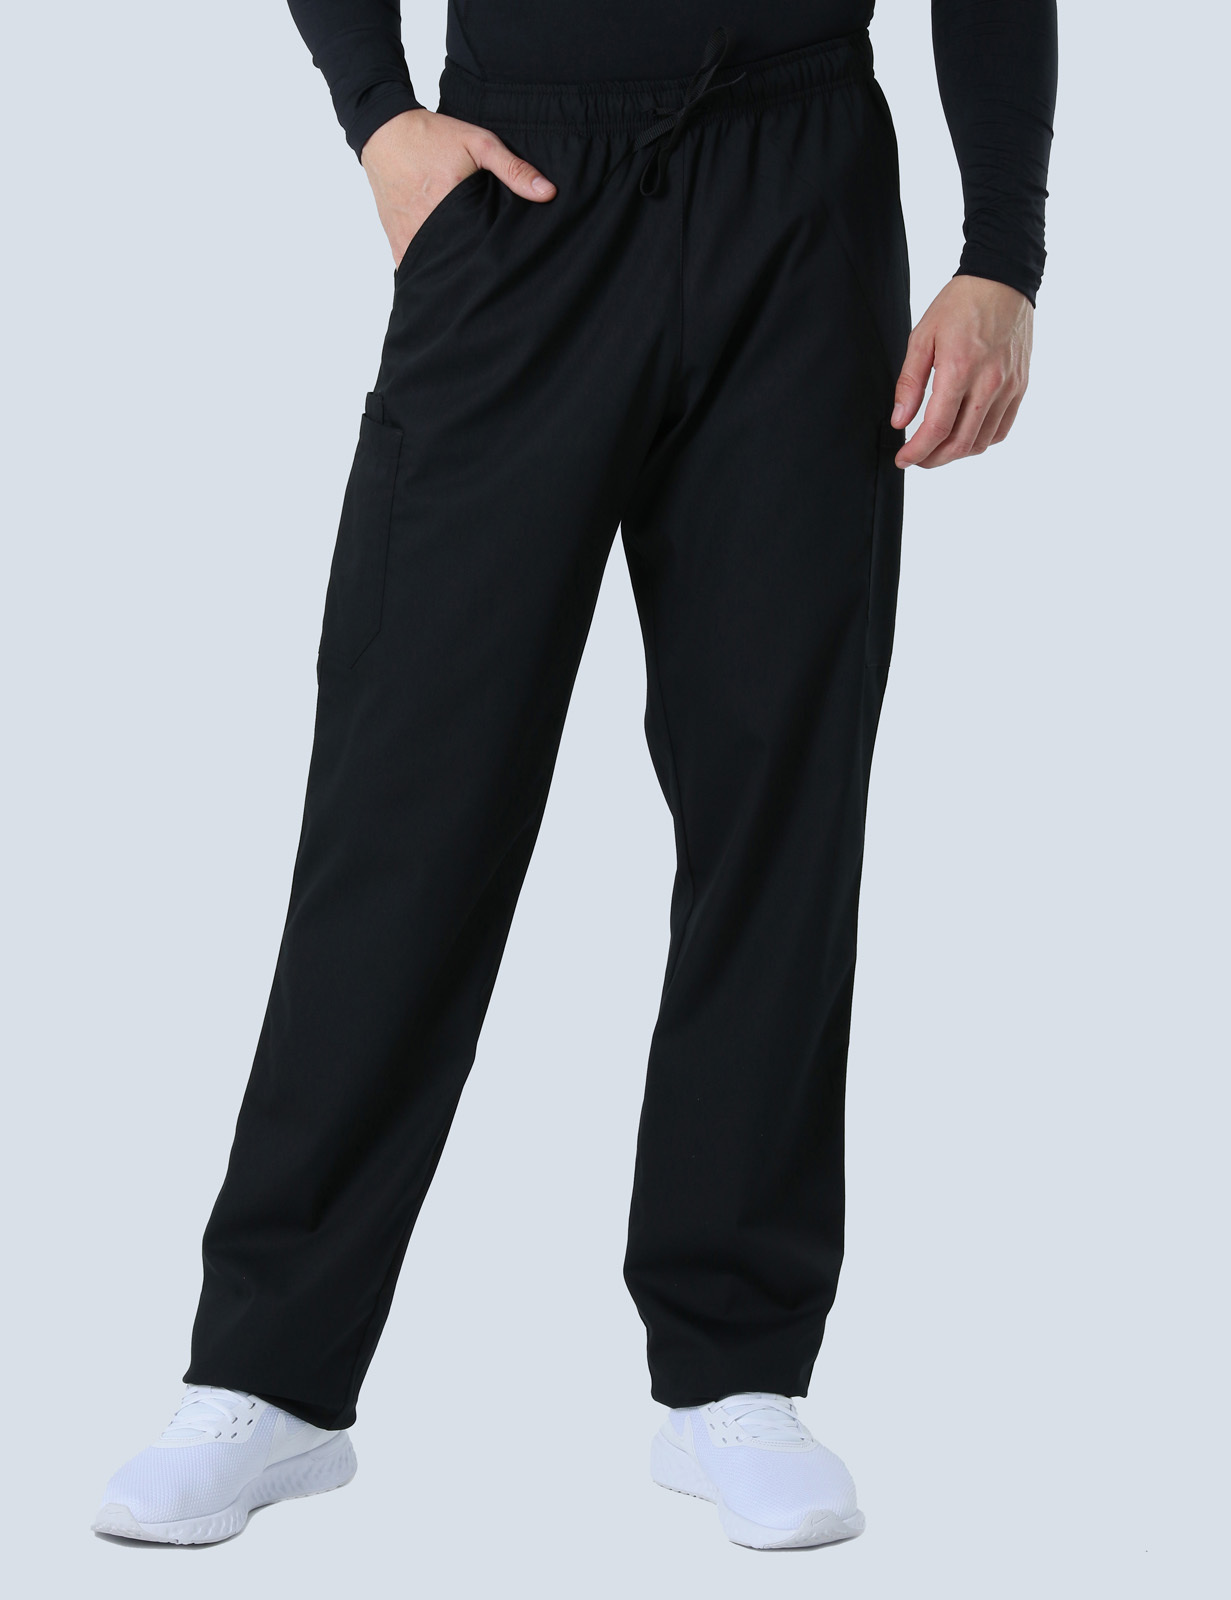 Men's Cargo Performance Pants - Black - X Small